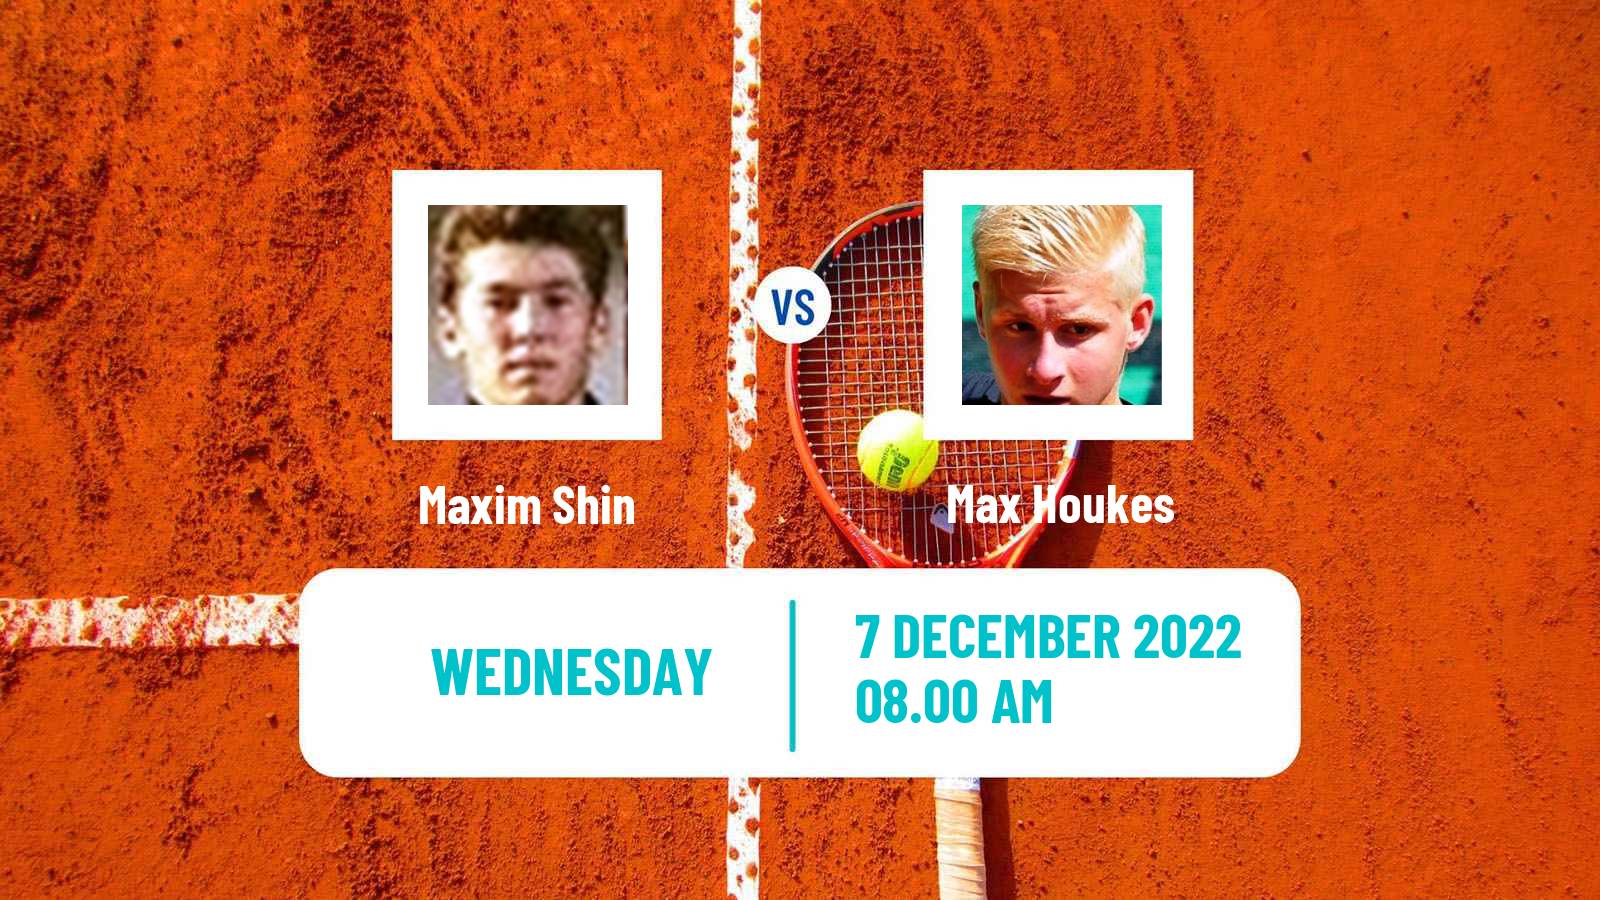 Tennis ITF Tournaments Maxim Shin - Max Houkes